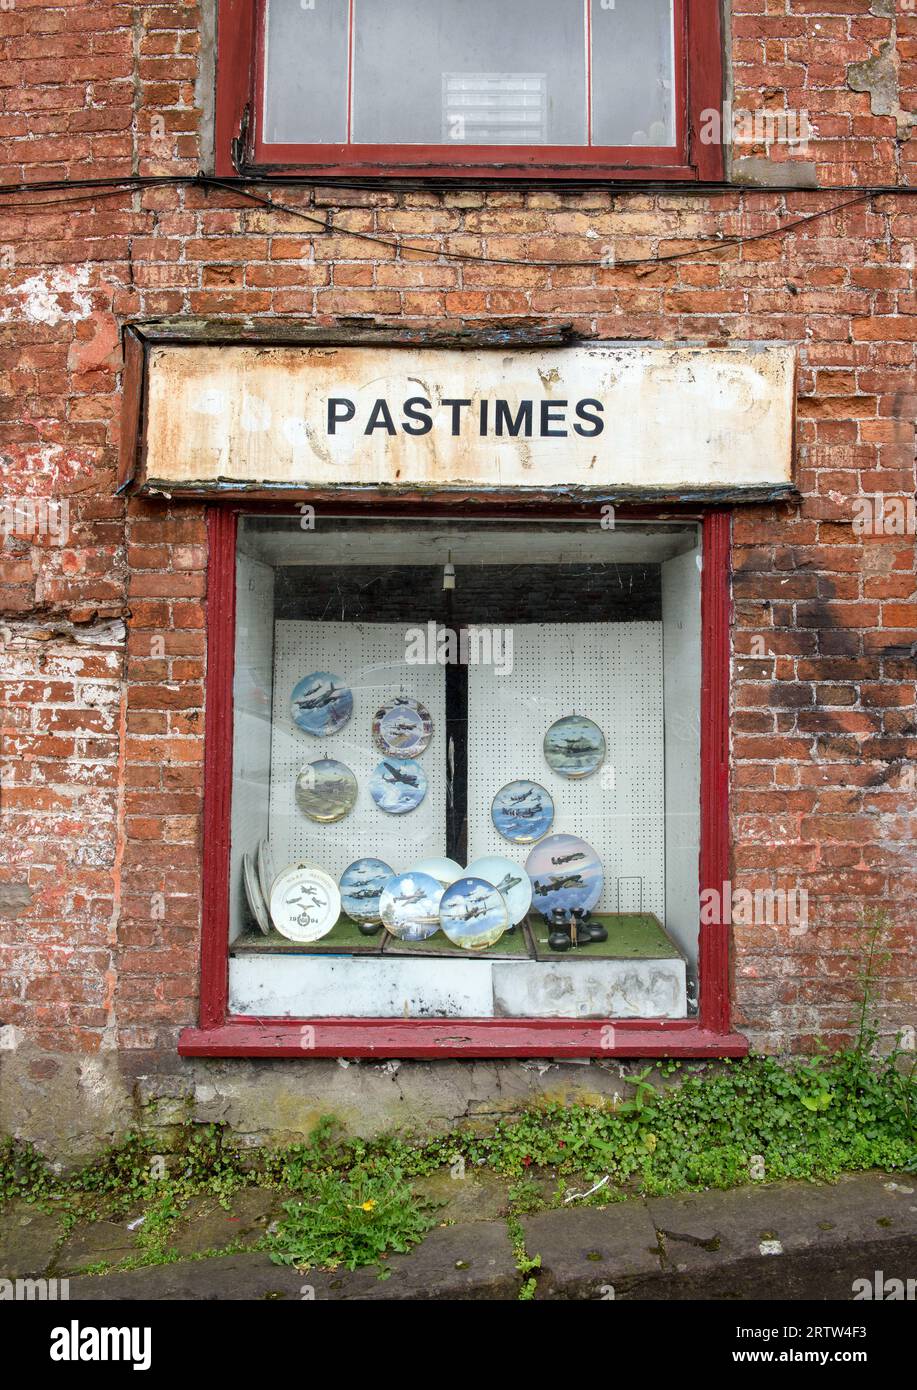 Pastimes the military memorabelia shop in Bristol UK Stock Photo